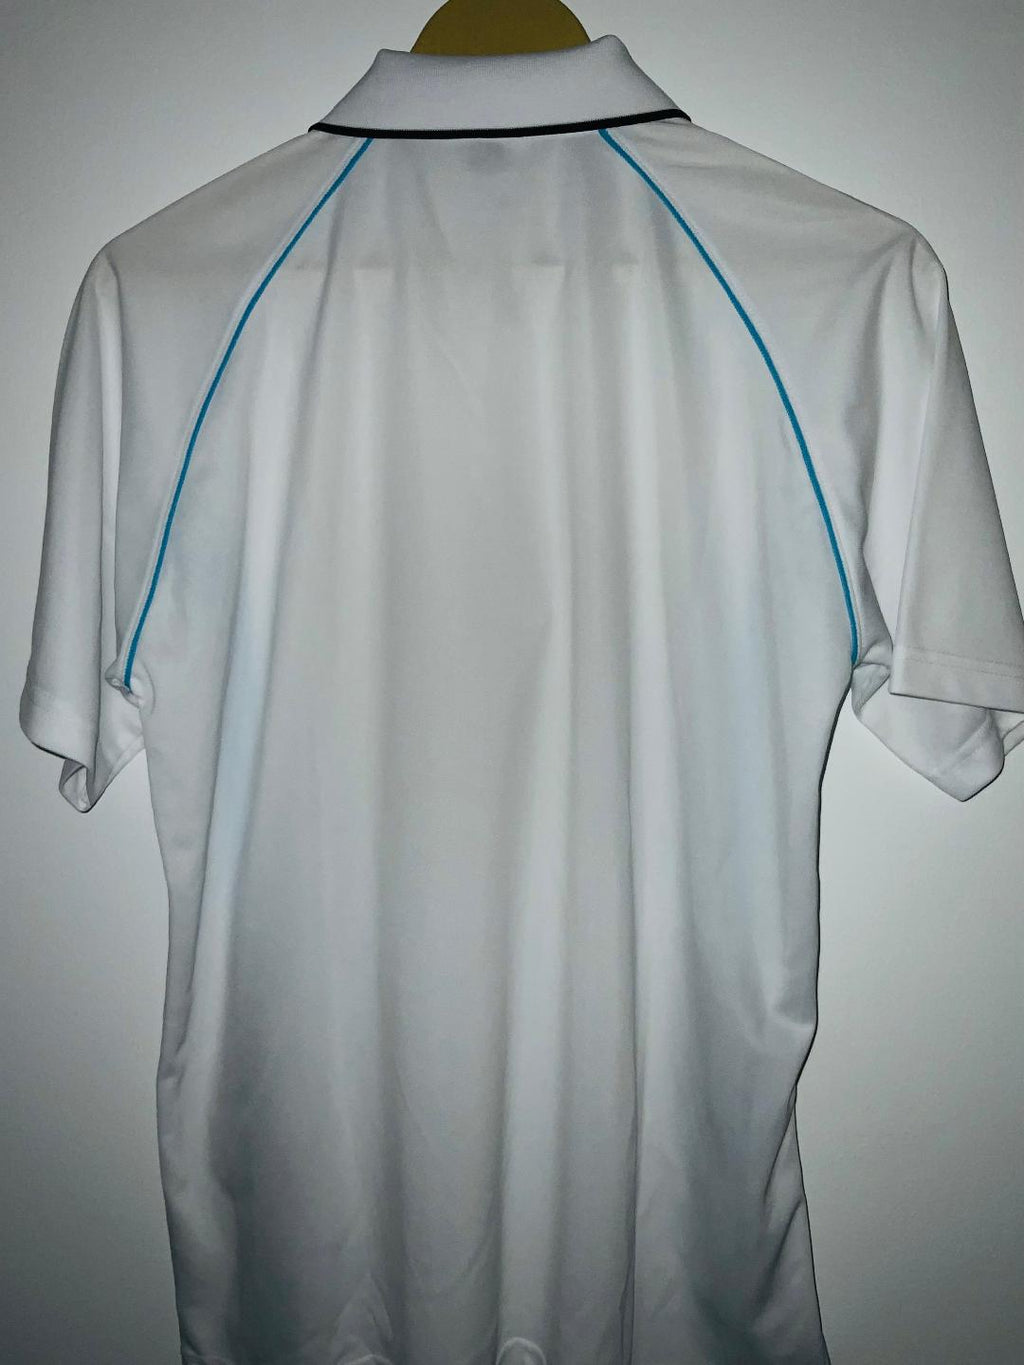 TWOROY Camiseta tipo Polo con cortes. Talla XL